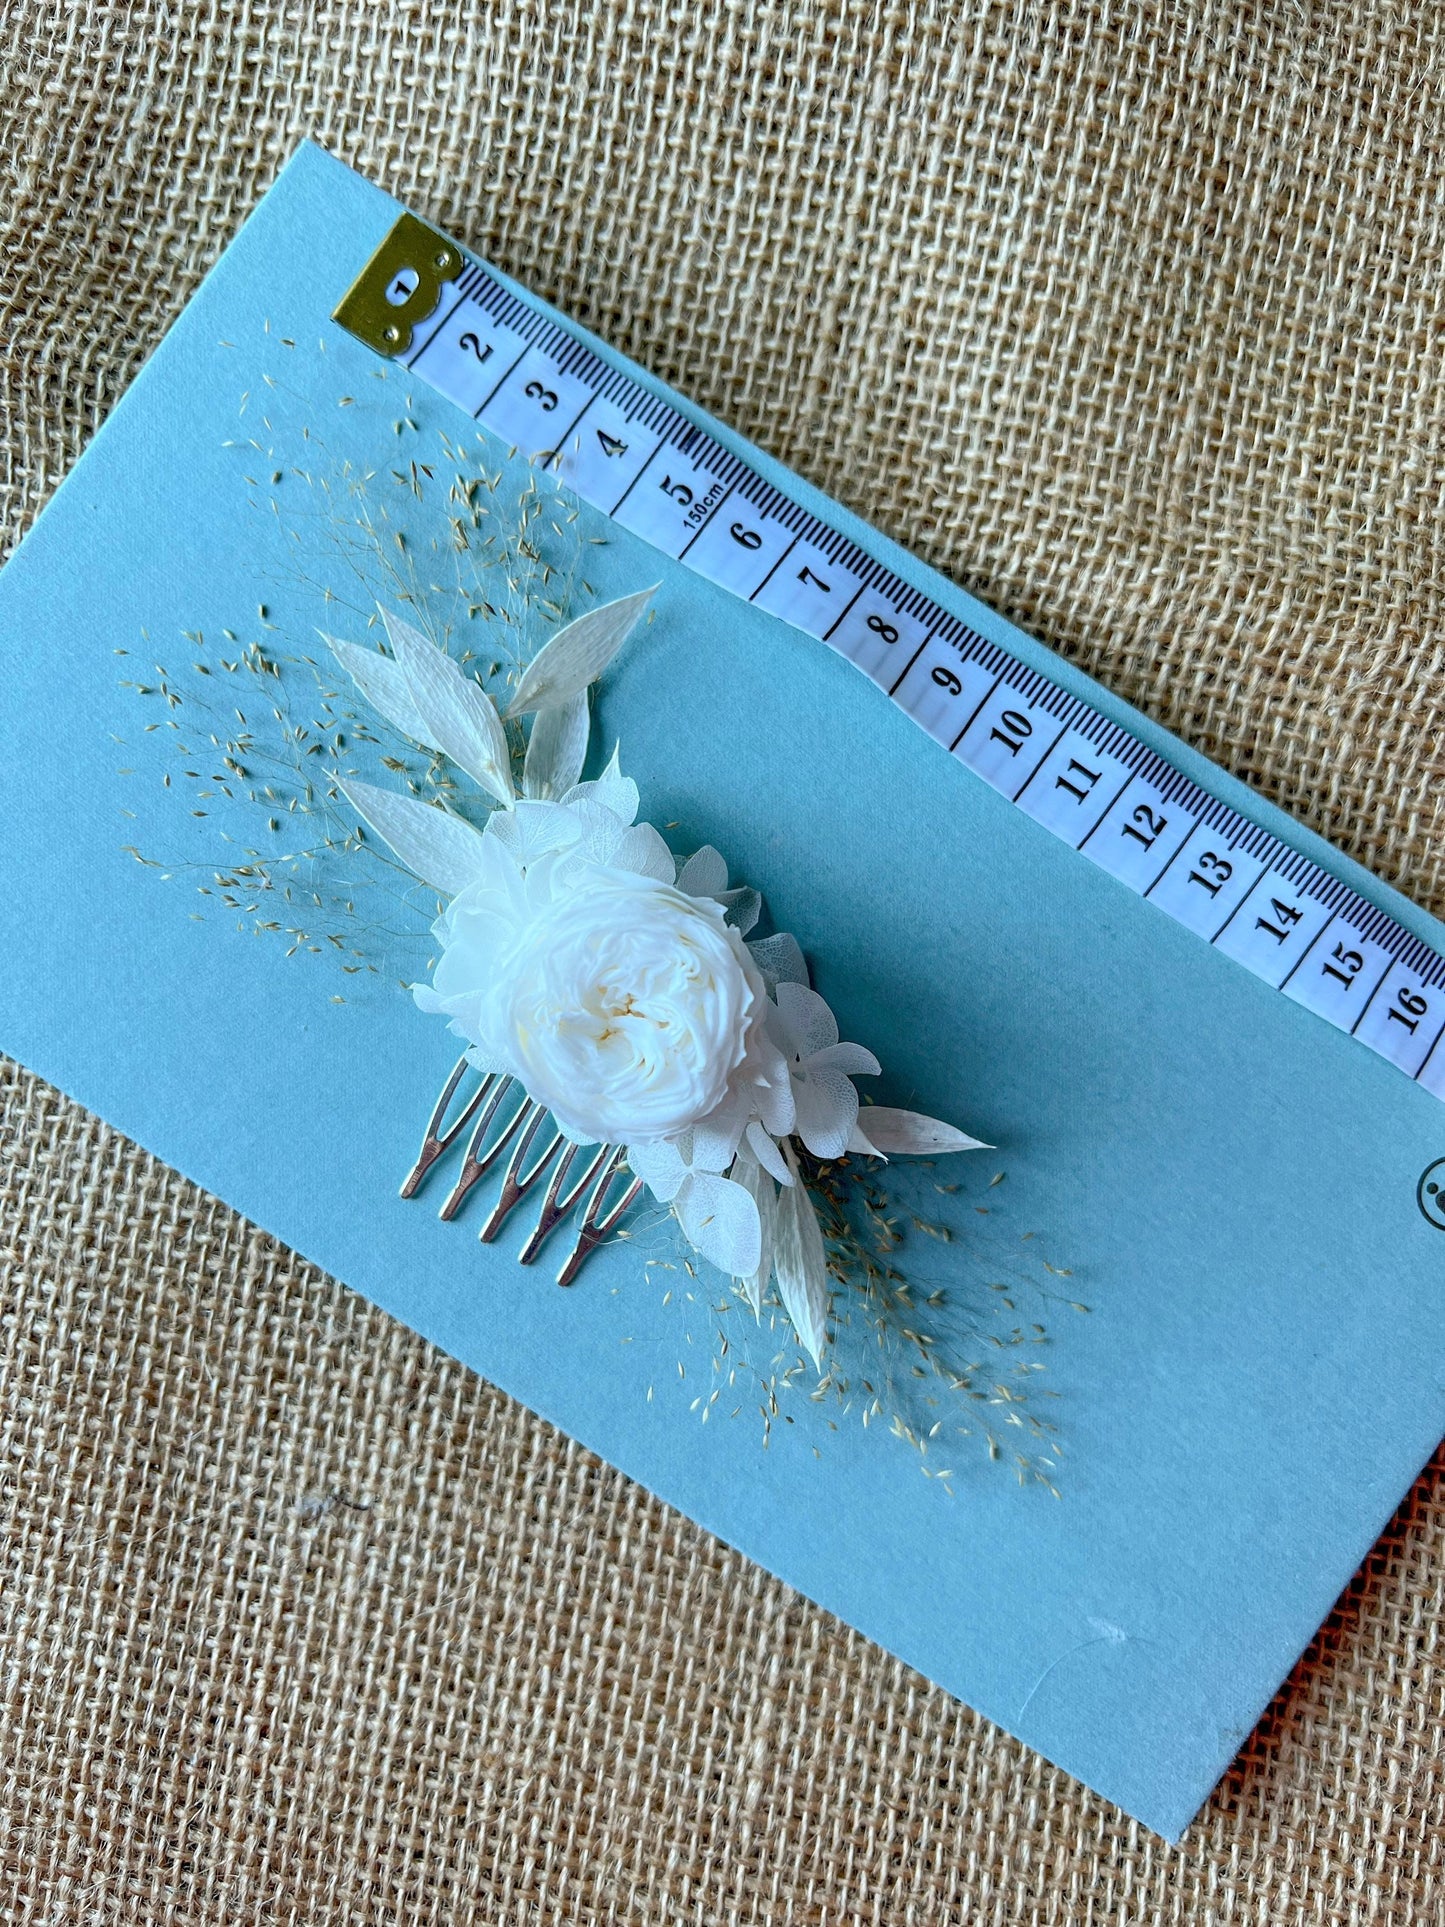 Bridal Minimal Garden Rose Hair Comb White, Minimalist Wedding Bridal Headpiece Dried Preserved Flower Comb, Boho Bride Hair Accessories UK